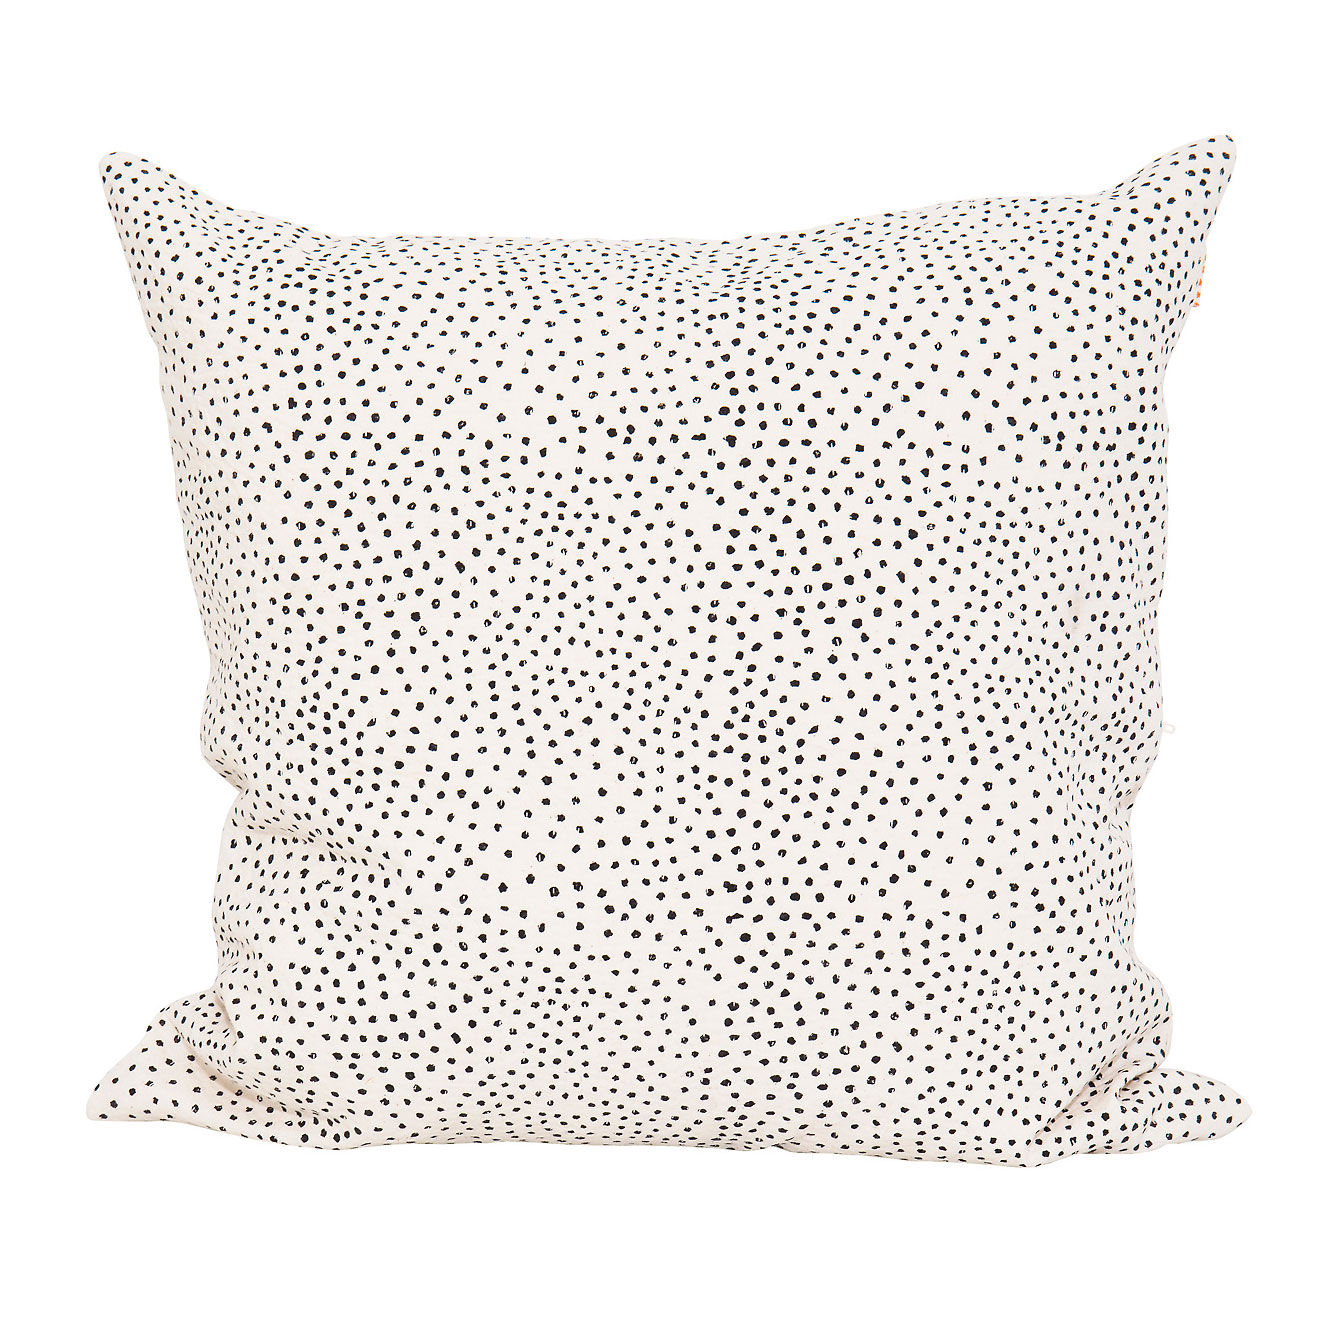 Fleck Cushion Cover 50x50 cm, Black/White